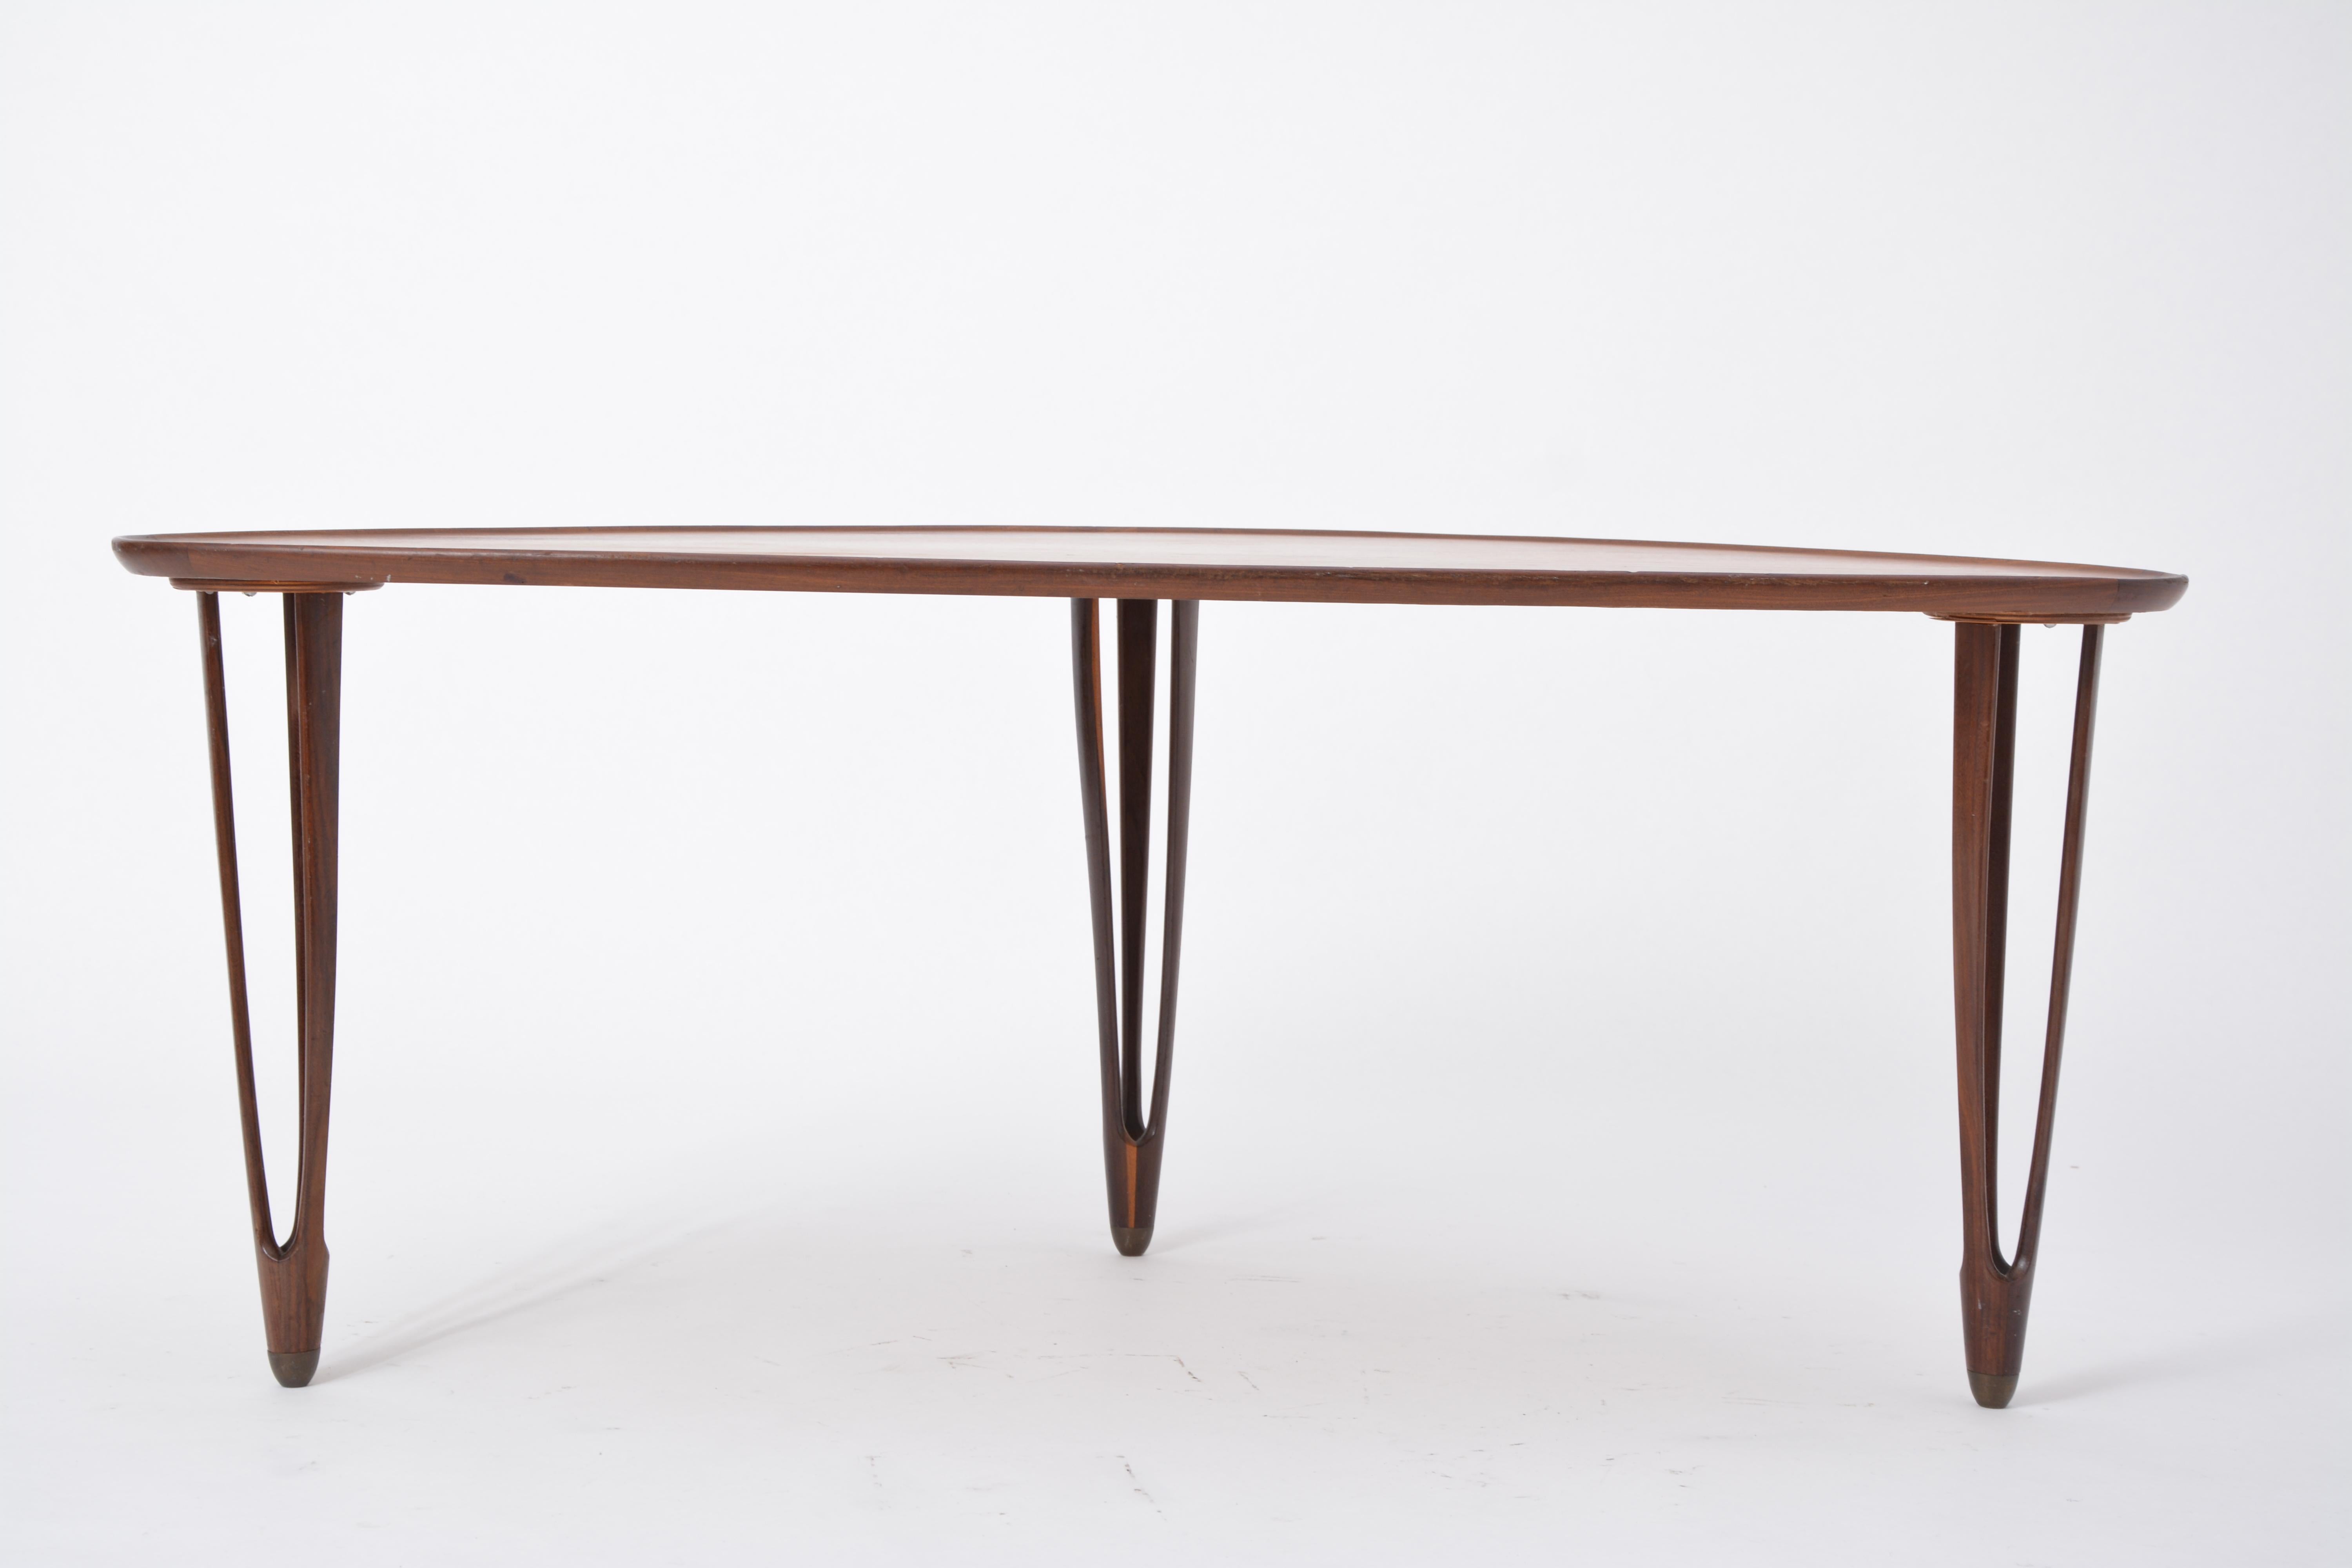 20th Century Danish Mid-Century Modern Teak tripod coffee table from BC Mobler